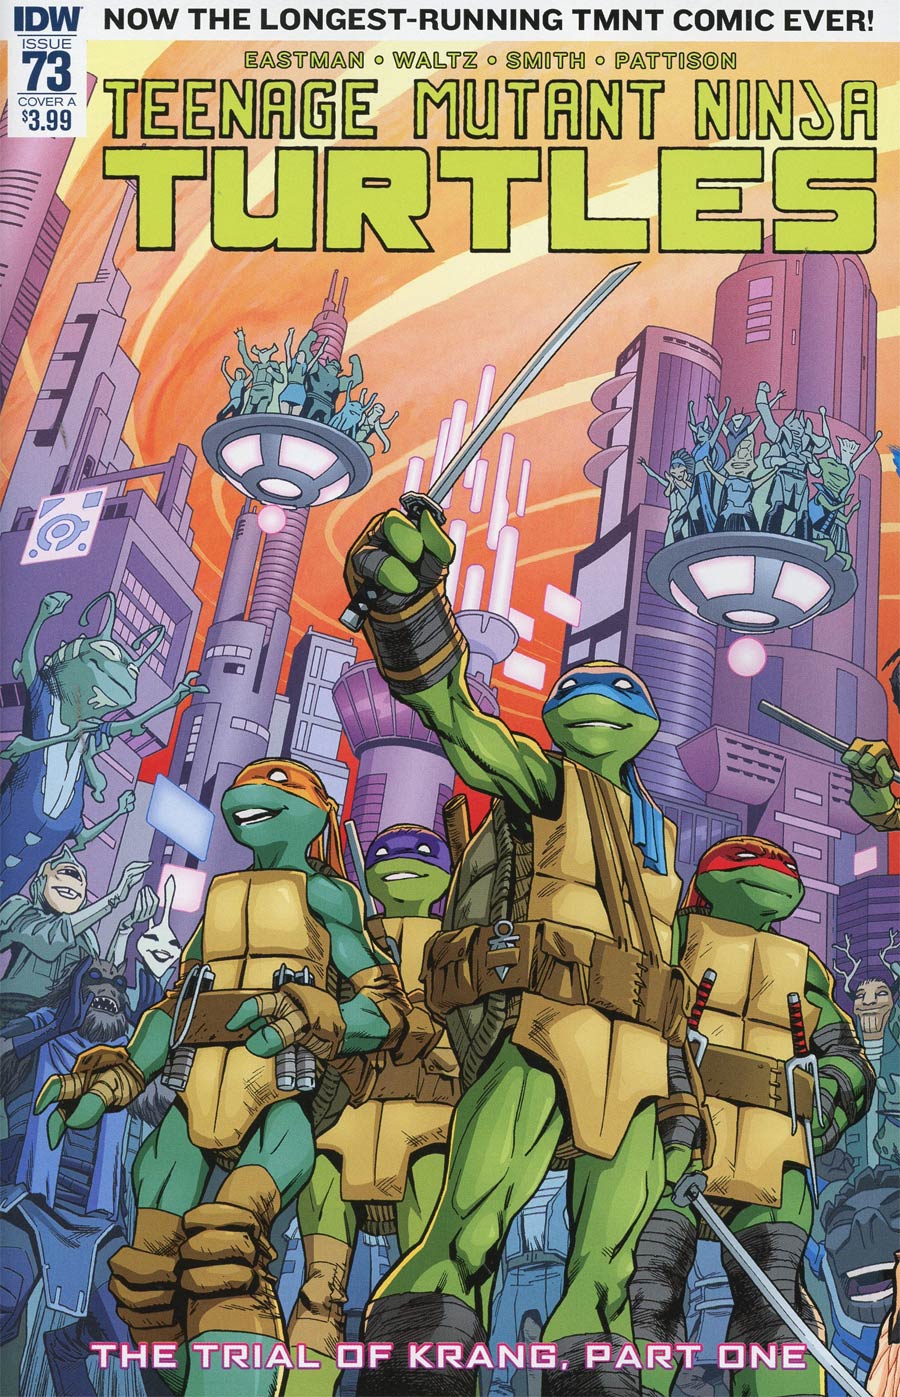 Teenage Mutant Ninja Turtles Vol 5 #73 Cover A Regular Cory Smith Cover